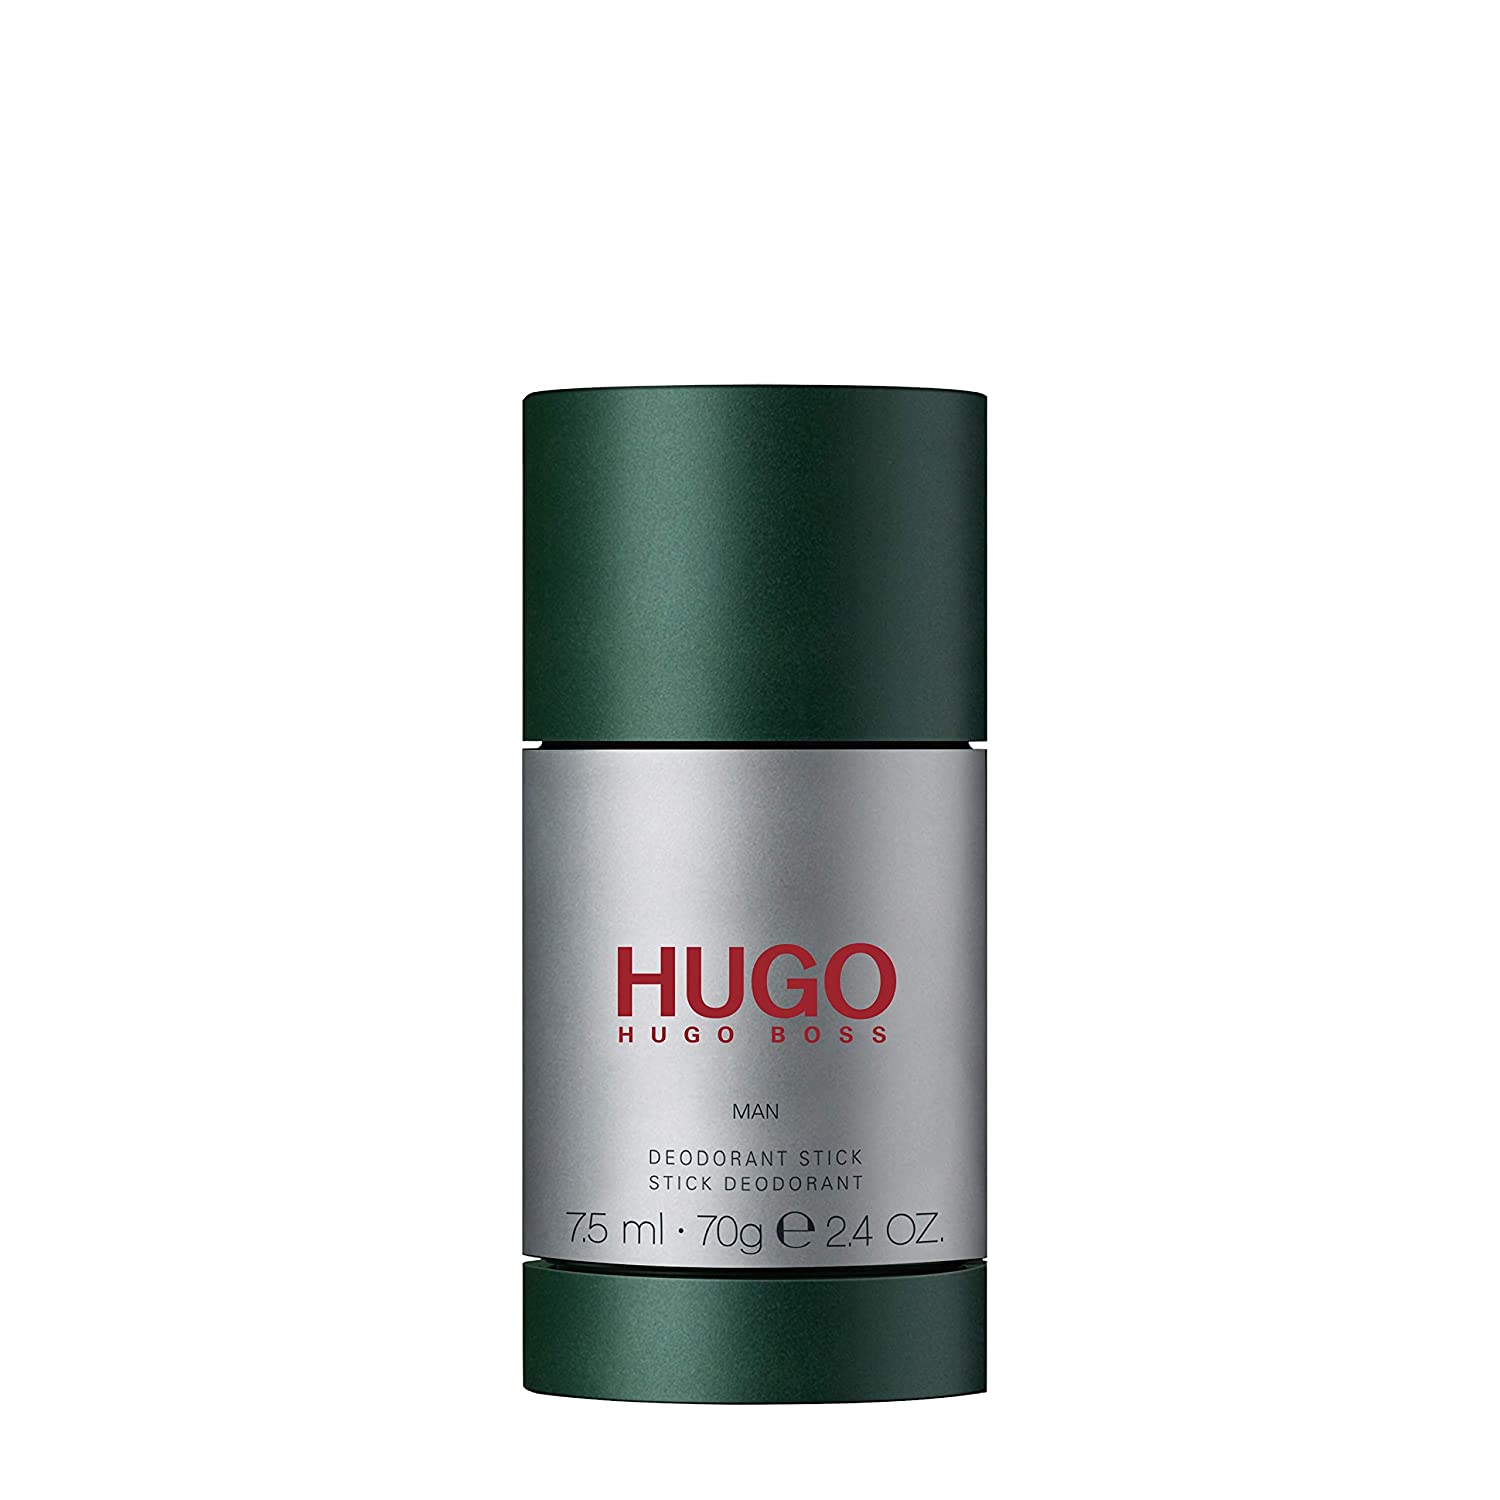 Hugo Boss MAN (Green) Deodorant Stick For Men, 2.4 Oz - Perfumansion